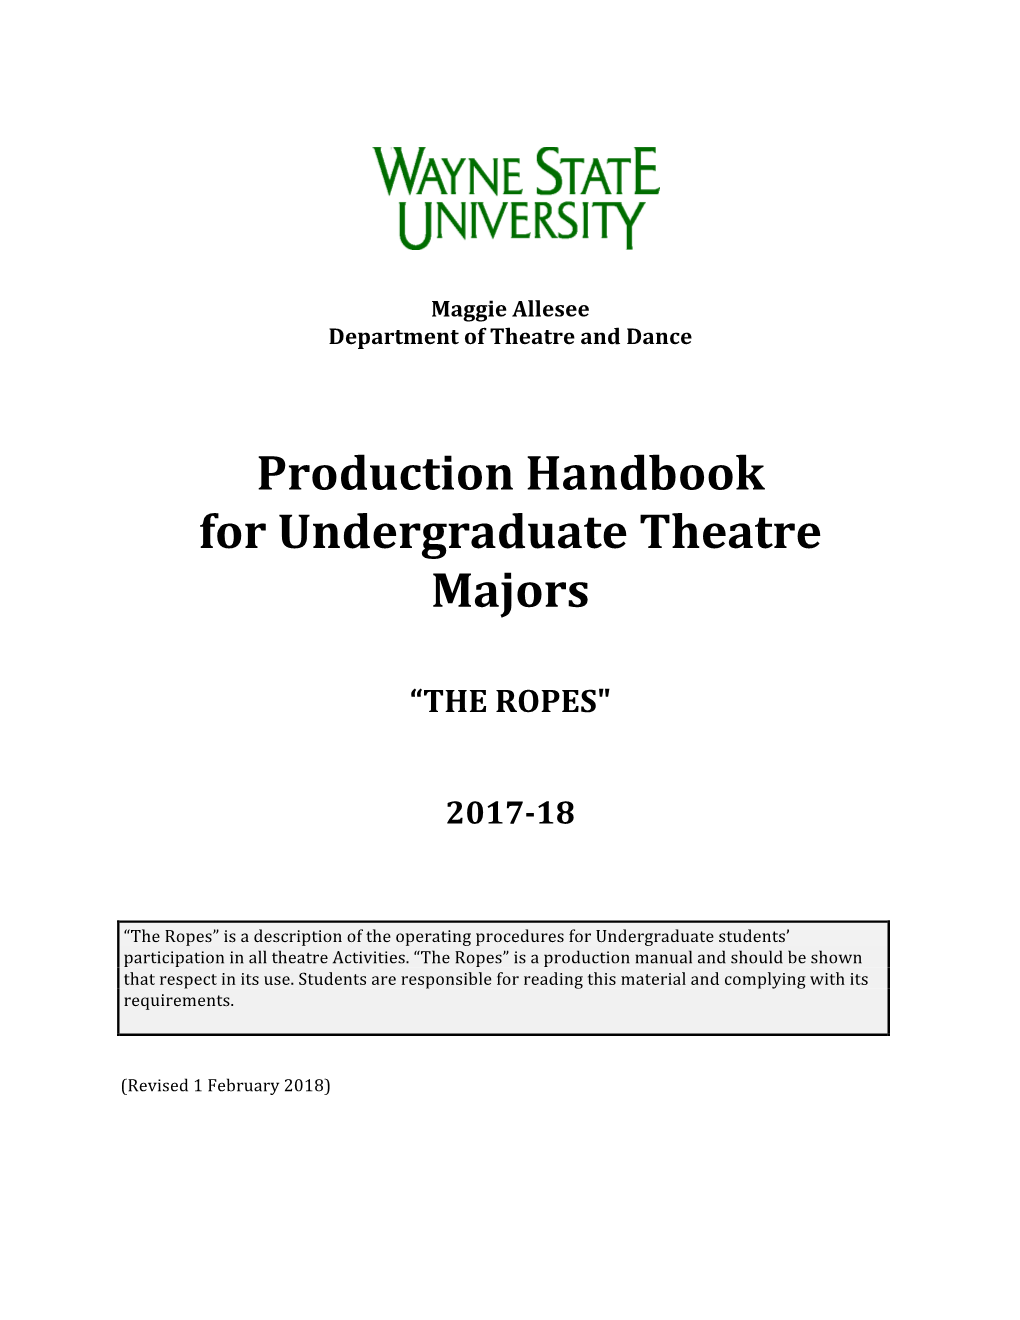 Production Handbook for Undergraduate Theatre Majors (Pdf)